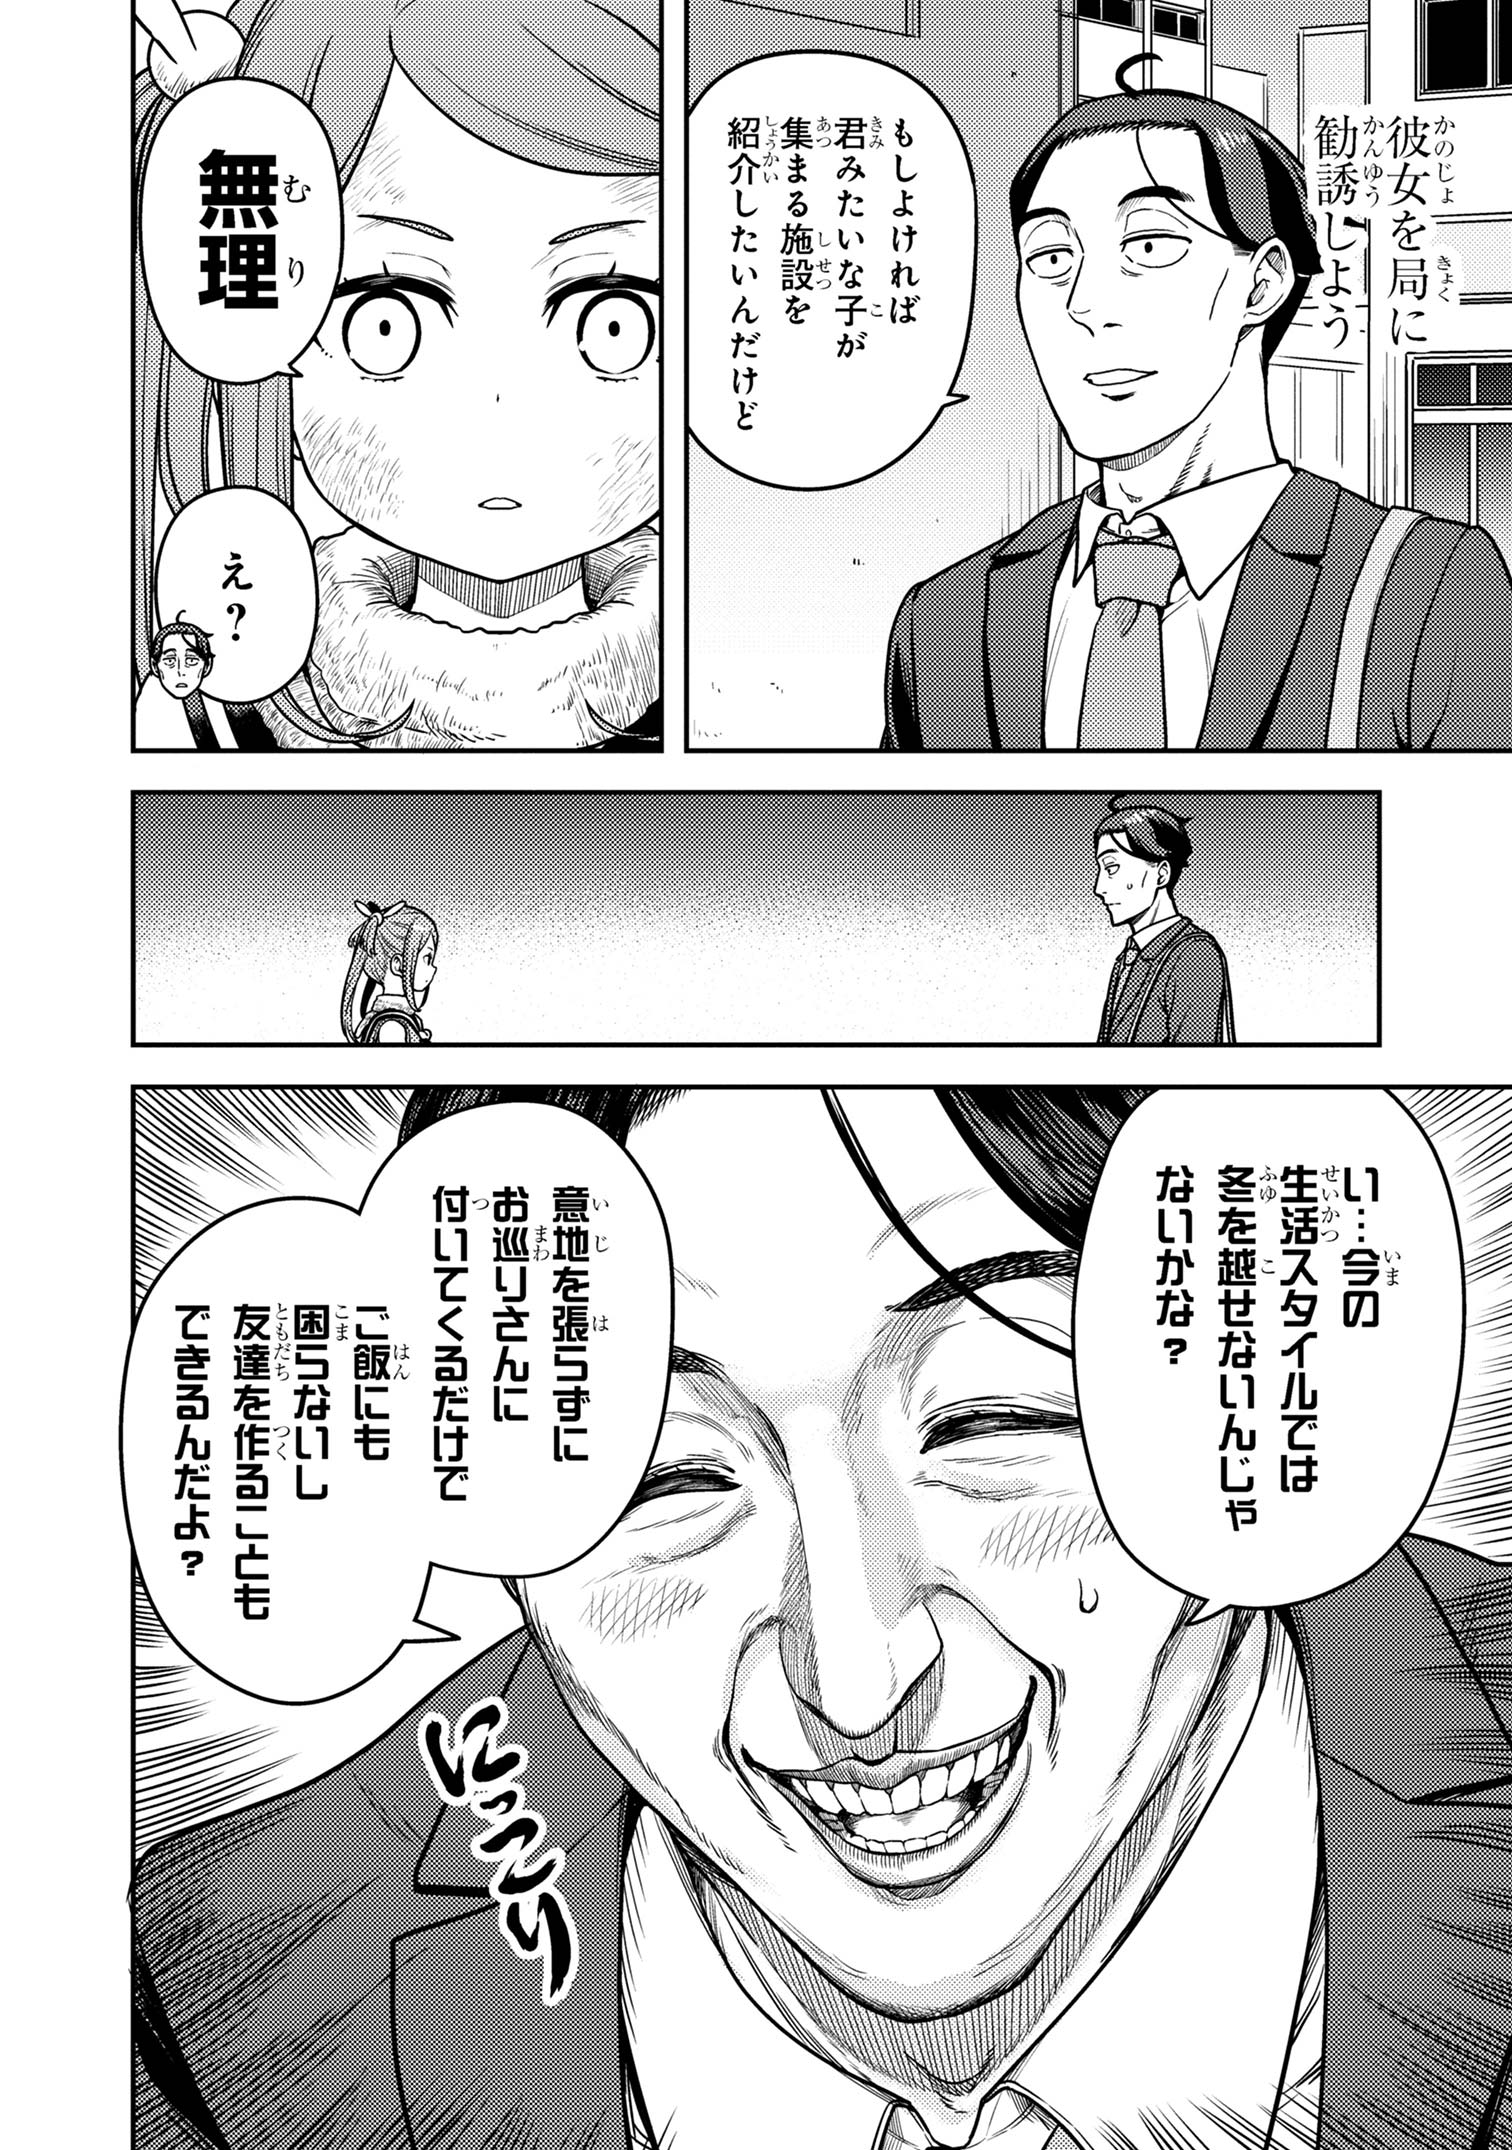 Sasaki to Pii-chan - Chapter 17.1 - Page 14